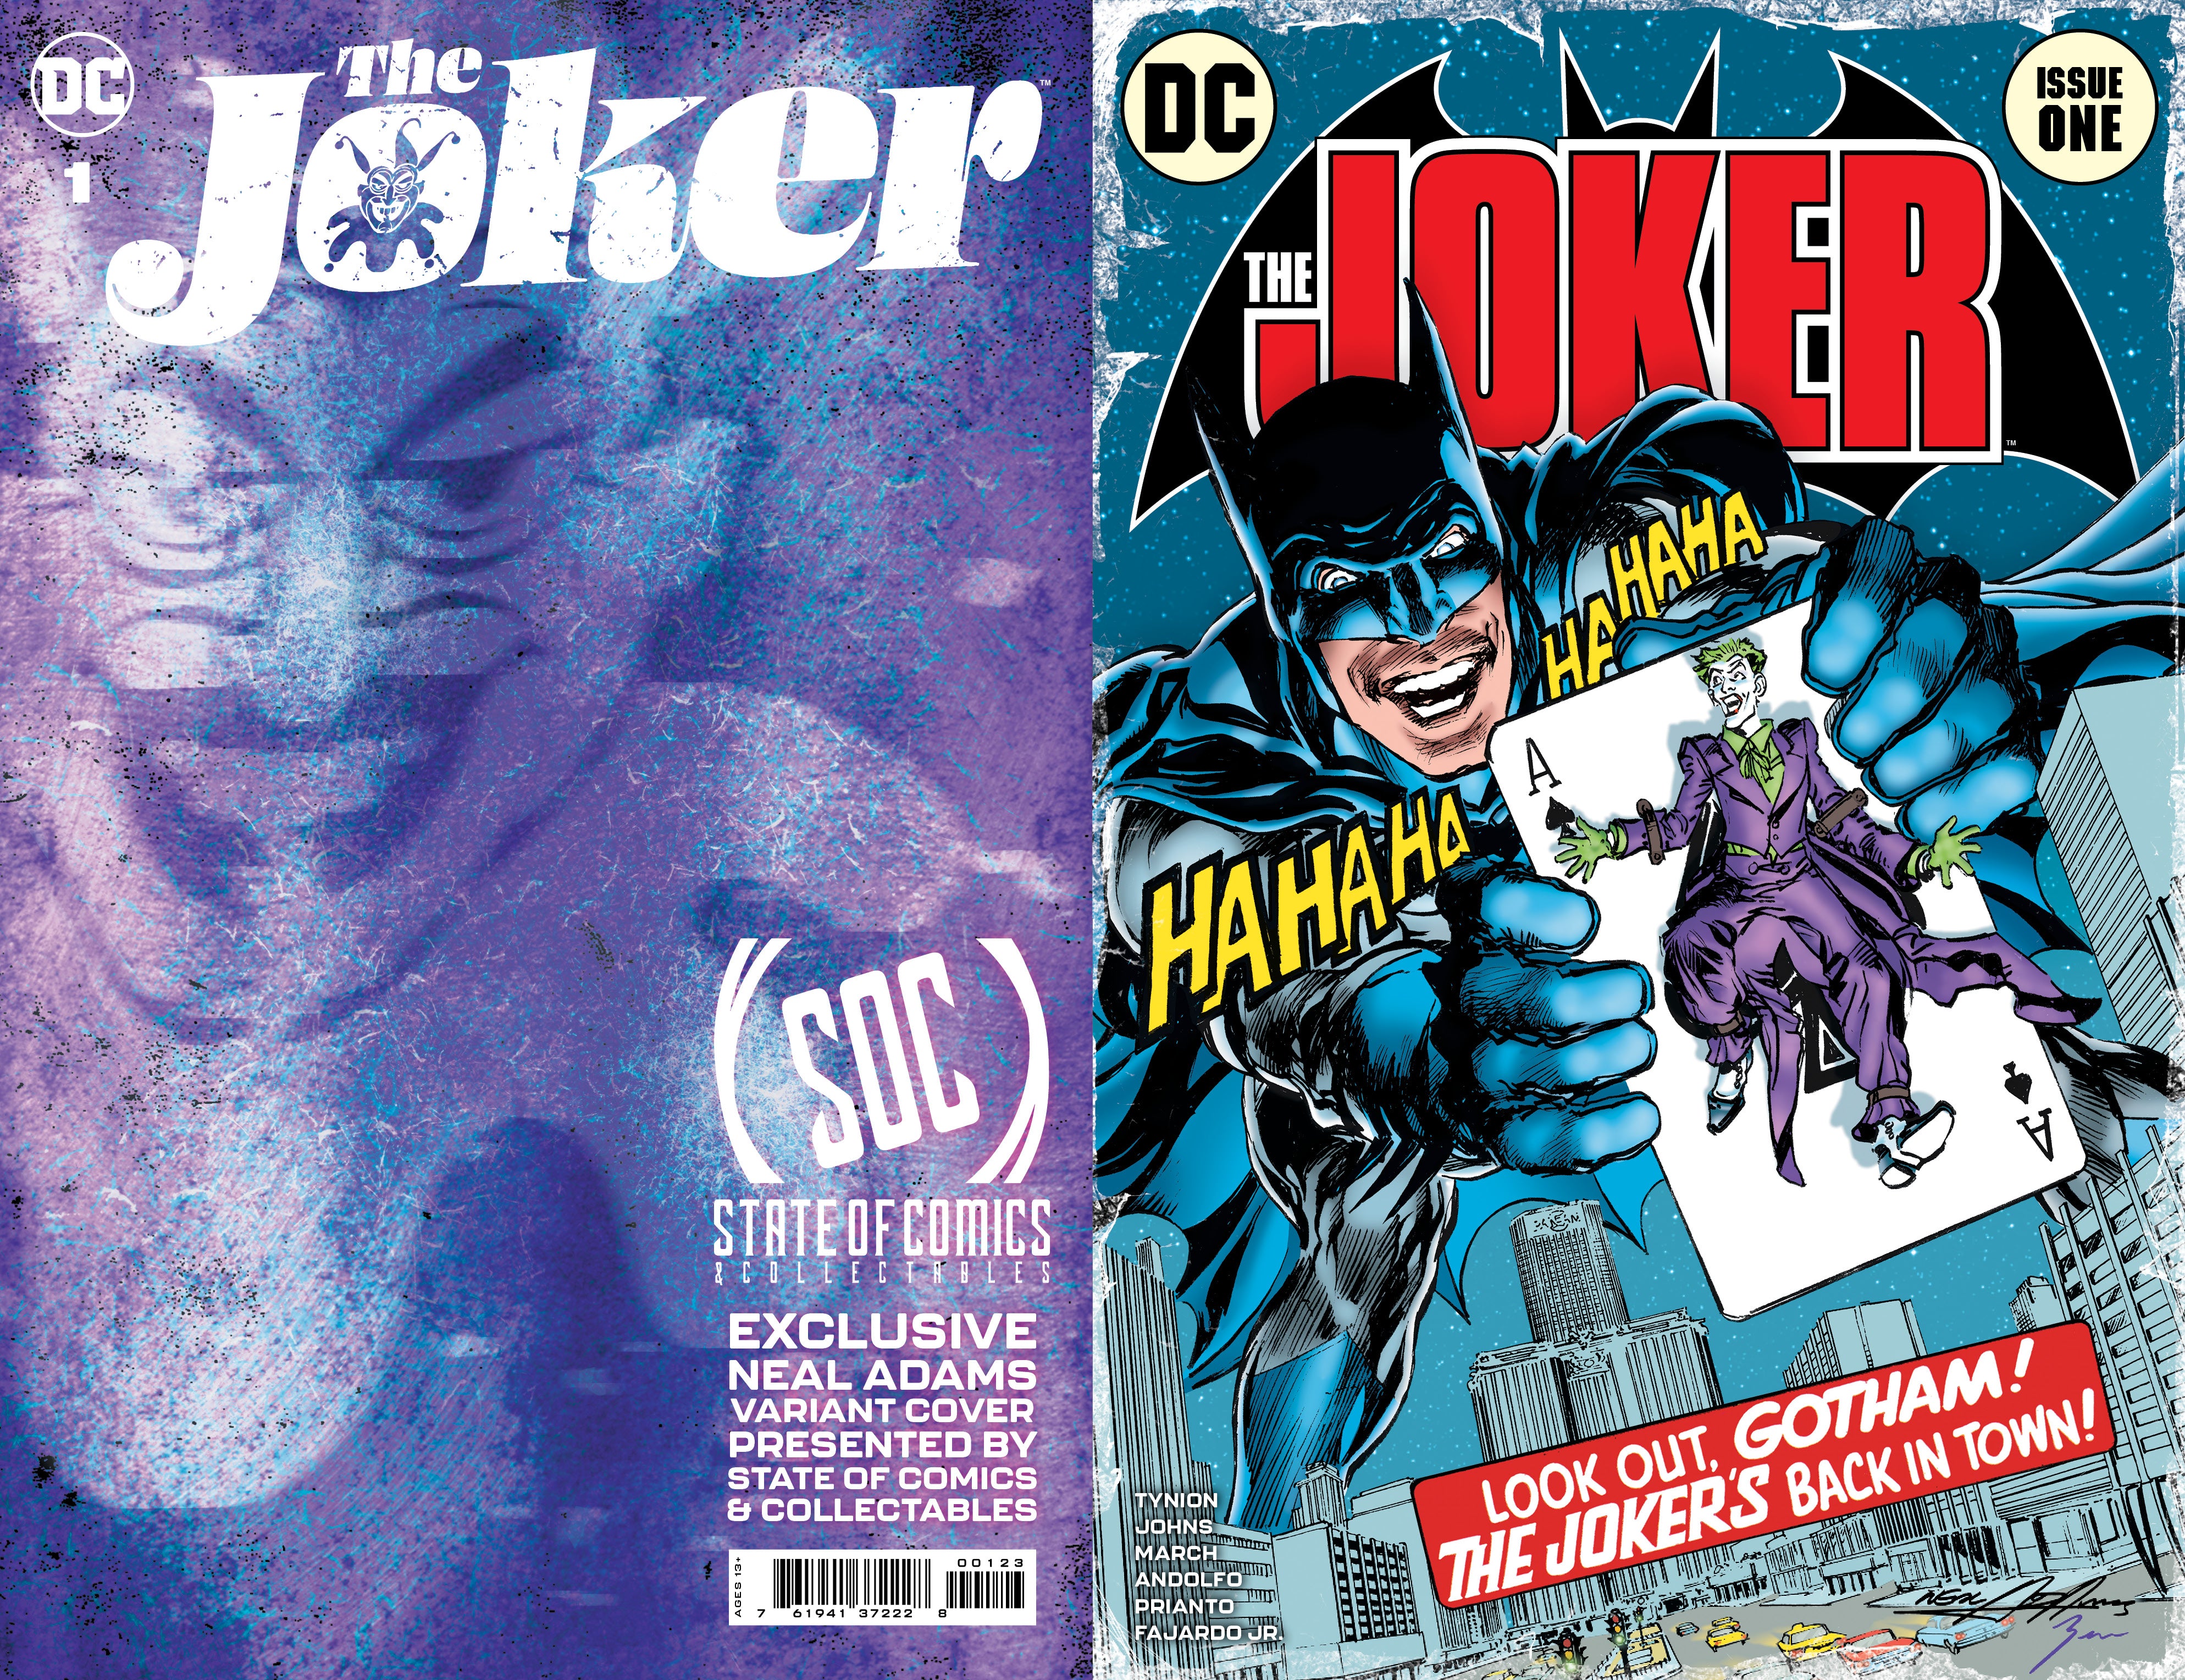 Joker #1 Neal Adams Exclusive Cover – State of Comics